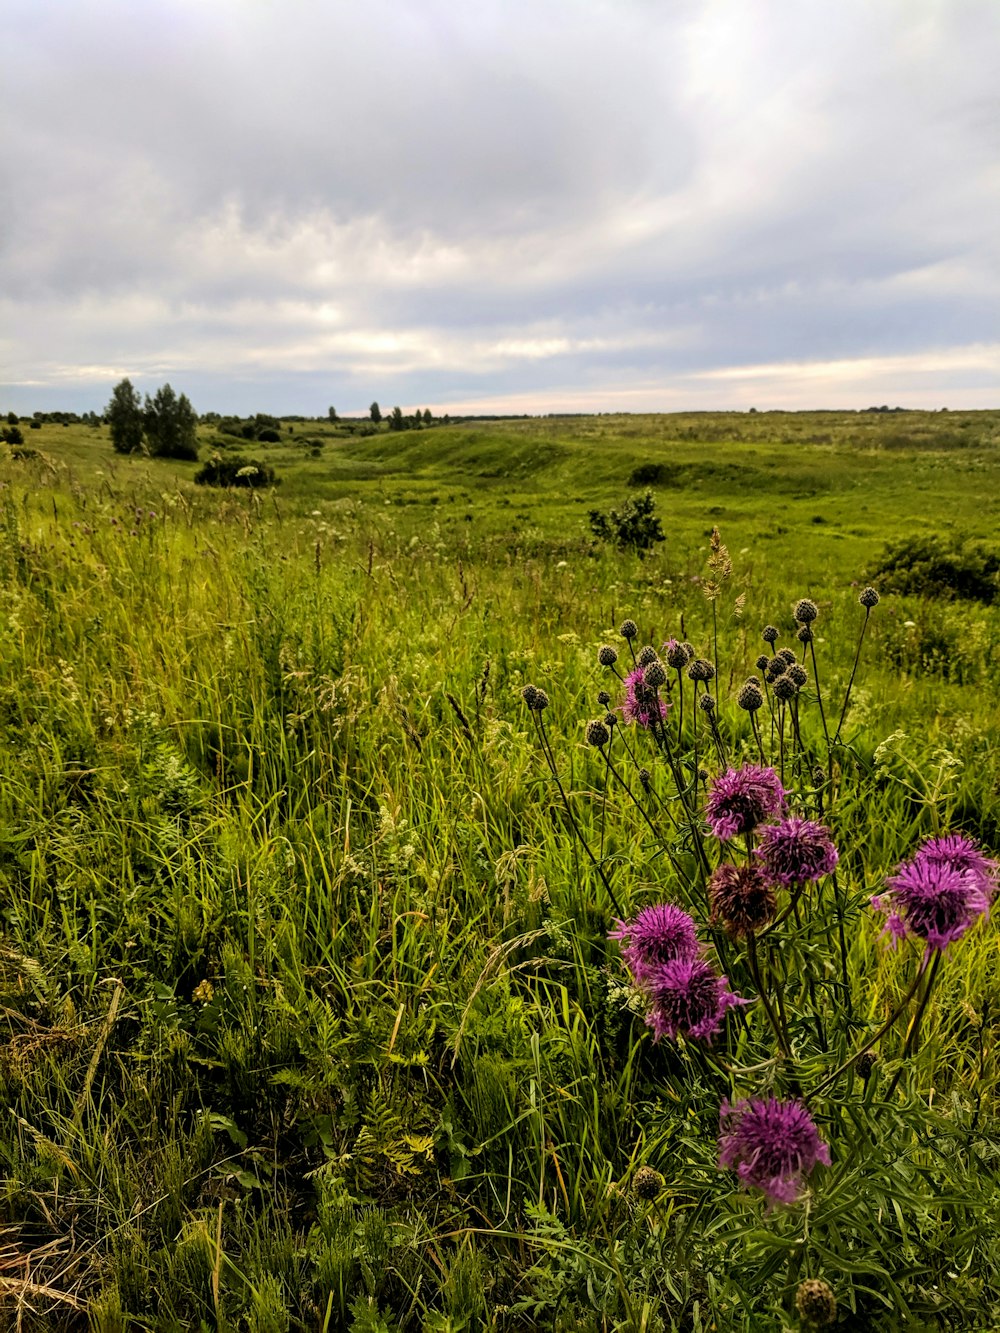 purple flower on green grass field under cloudy sky during daytime